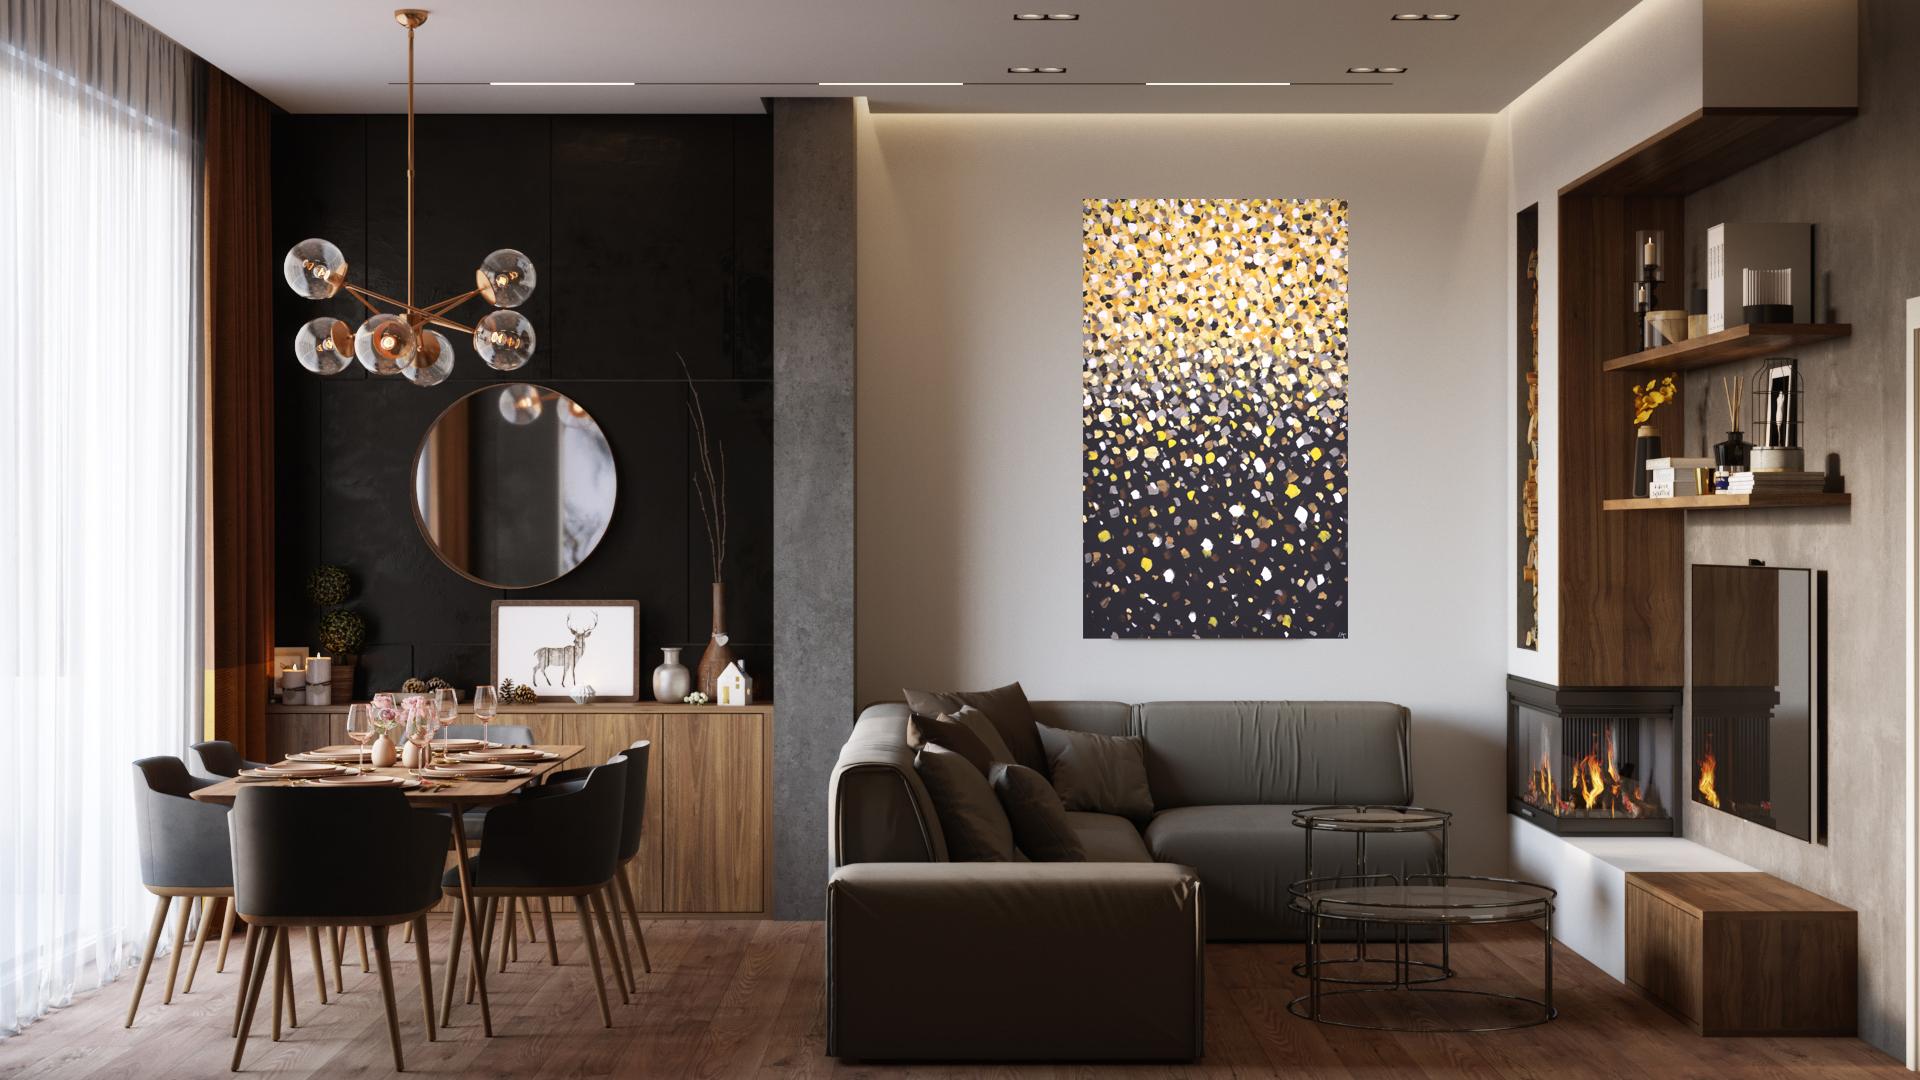 Poantillism. Glare. Interior Painting Modern Design with Black Gold Yellow Dots 6